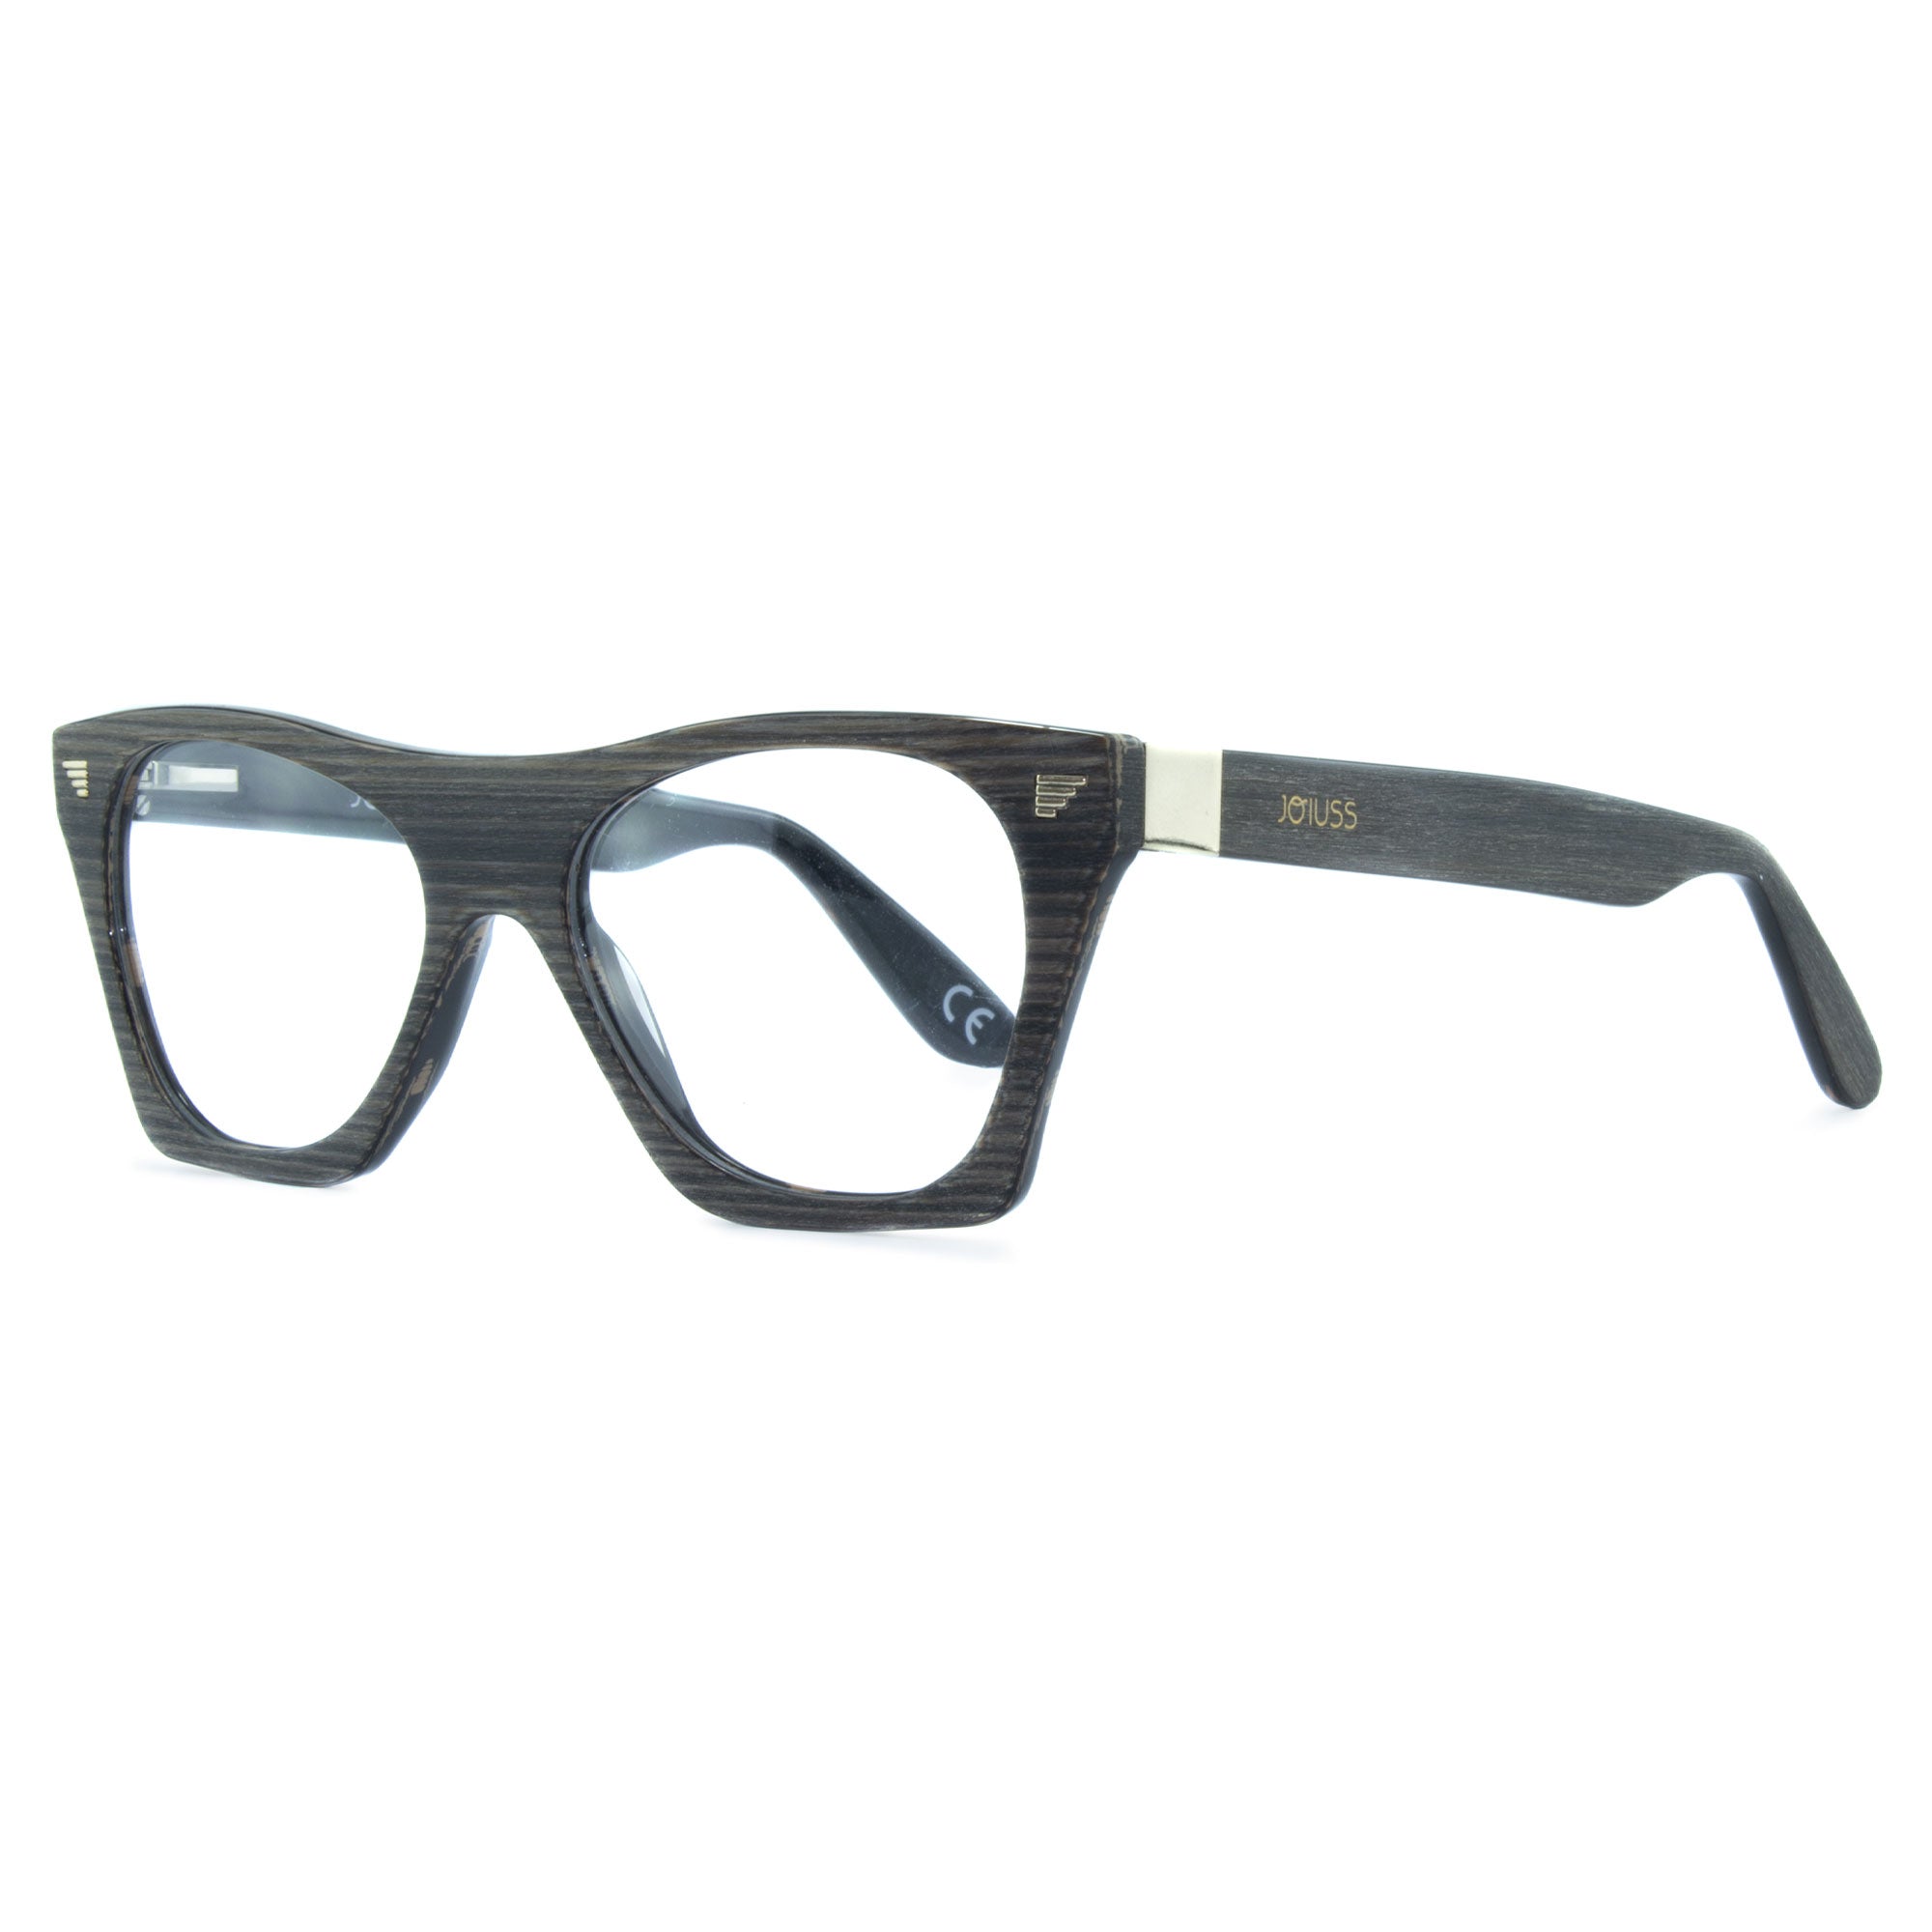 Horn Rimmed Glasses Frame - Dark Wood Effectc- Oscar